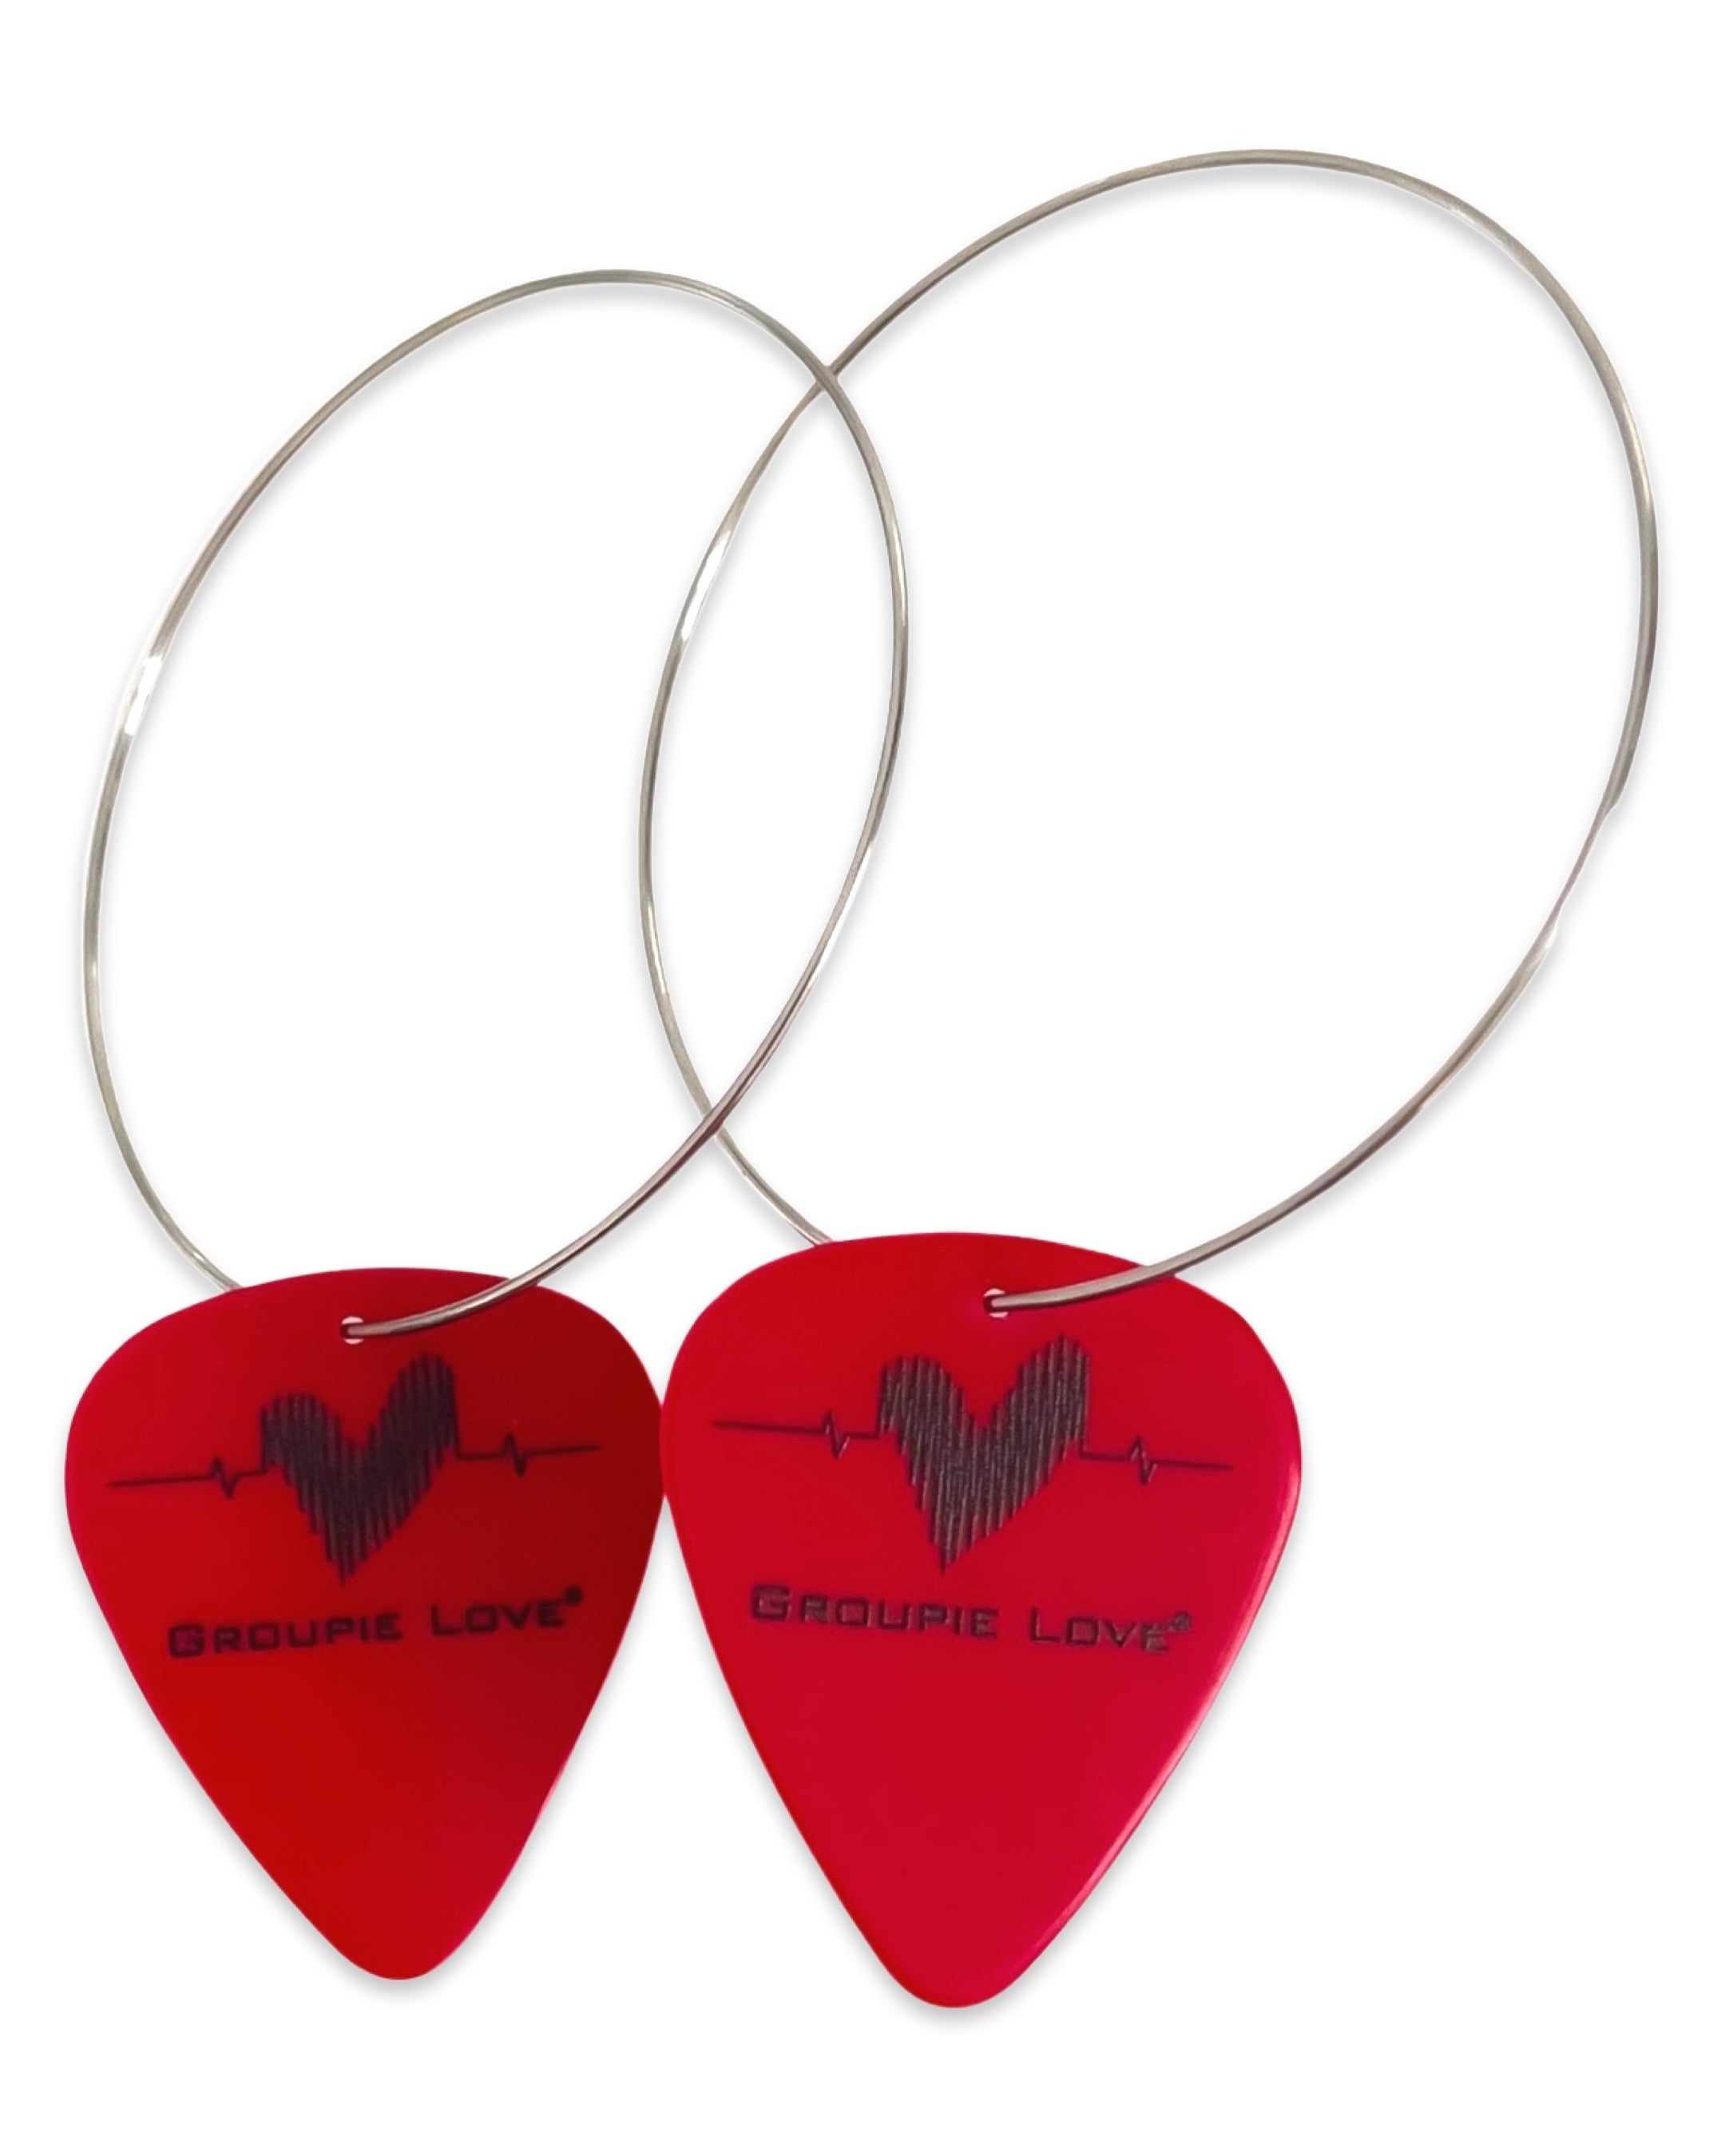 WS Groupie Love Red Single Guitar Pick Earrings